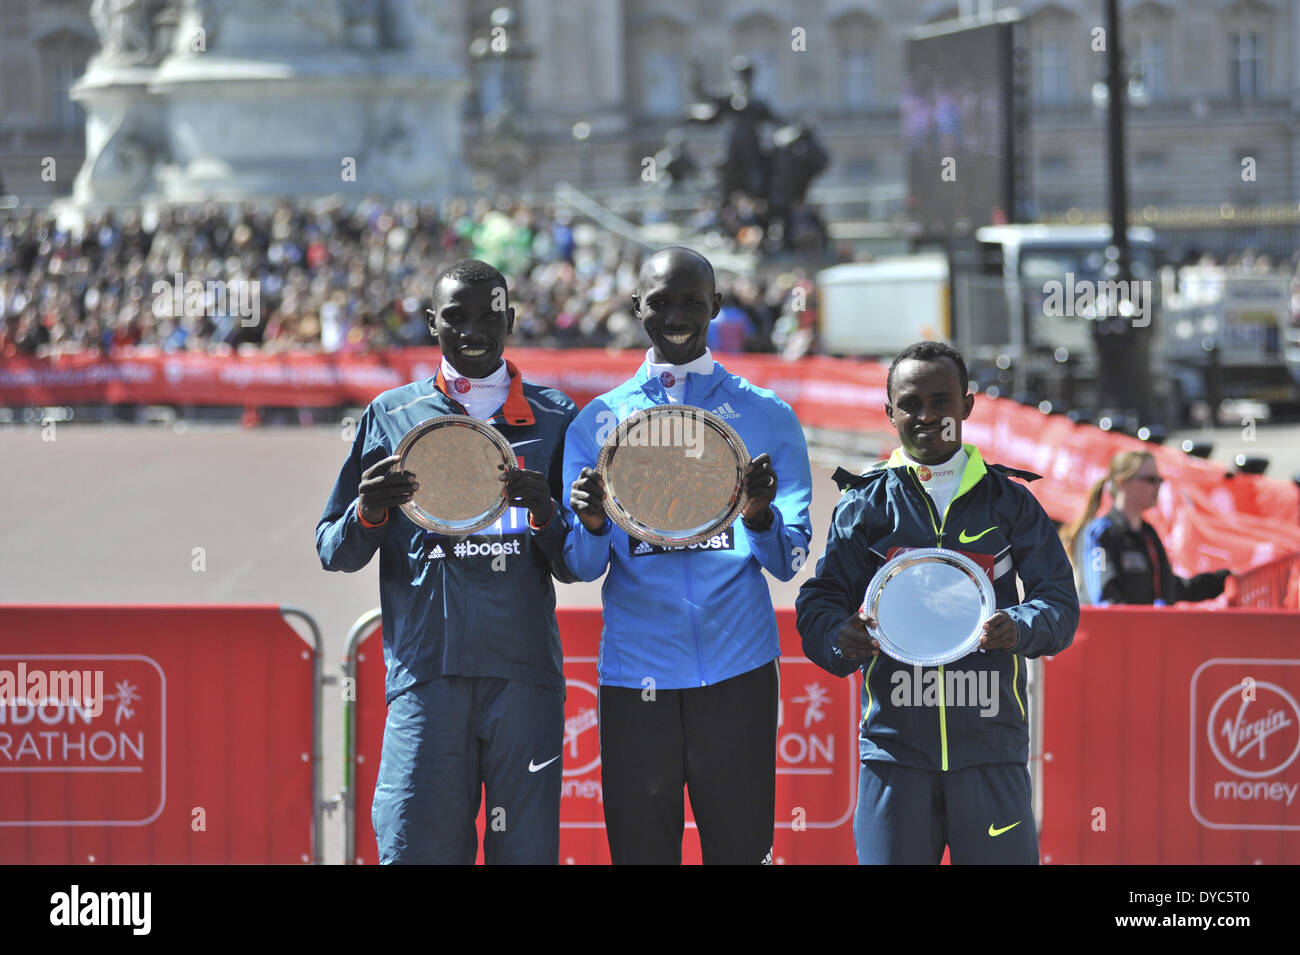 Uomini Virgin London Marathon vincitori reciveing i loro trofei dopo la gara. Da sinistra a destra: Stanley Biwott (KE) - 2° posto, 2 ore e 4 minuti 55sec; Wilson Kipsang (KE) - 1° posto, 2 ore e 4 minuti 29sec; Tsegaye Kebede (ET) - 3 Posto, 2 ore e 6 minuti 30s. Foto Stock